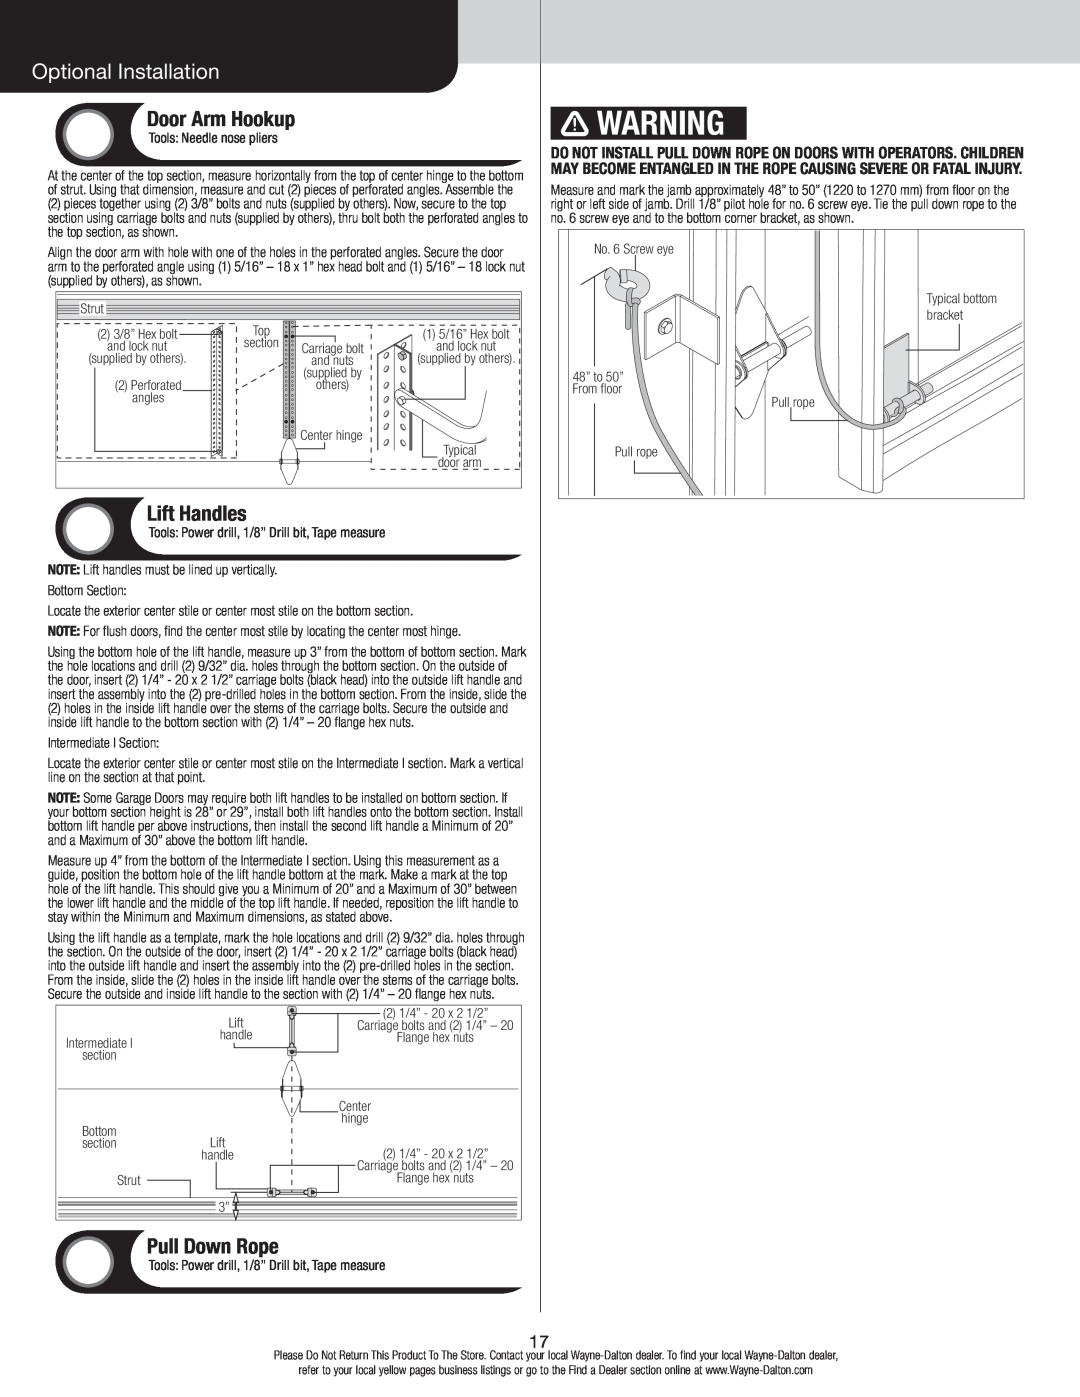 Wayne-Dalton 7100 Series installation instructions Optional Installation, Door Arm Hookup, Lift Handles, Pull Down Rope 